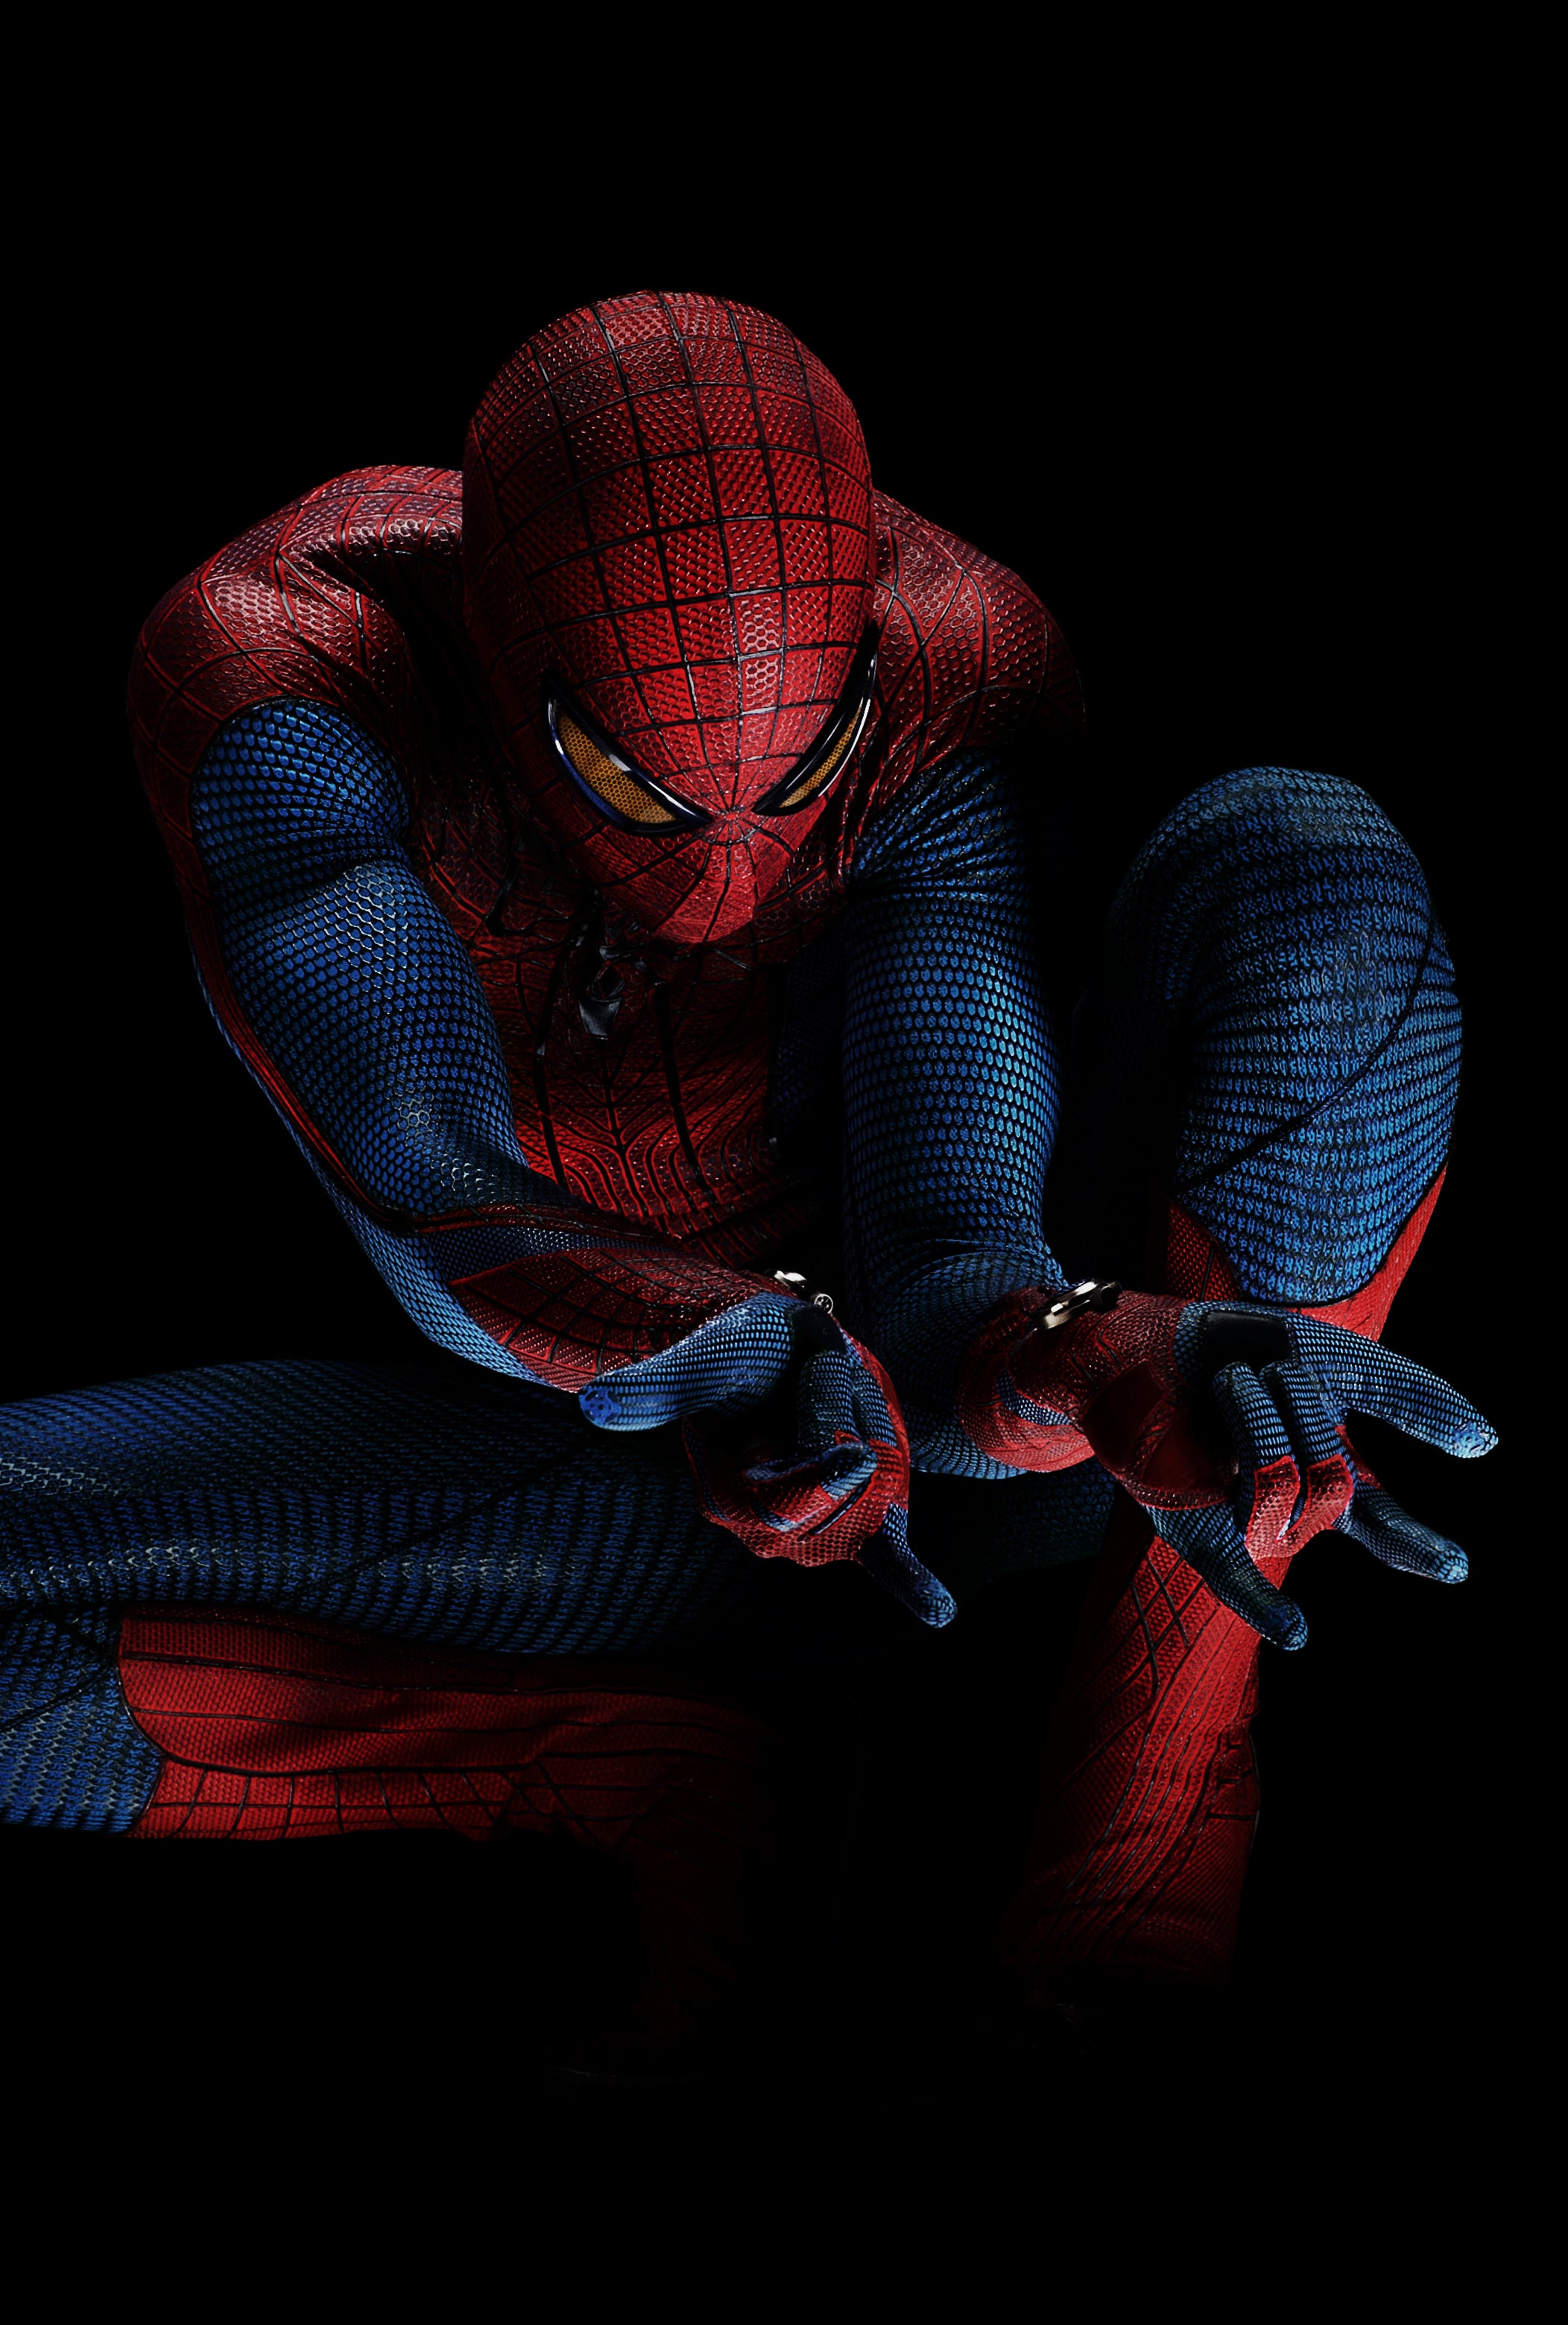 Amazing Spiderman Movie 2012 Trailer